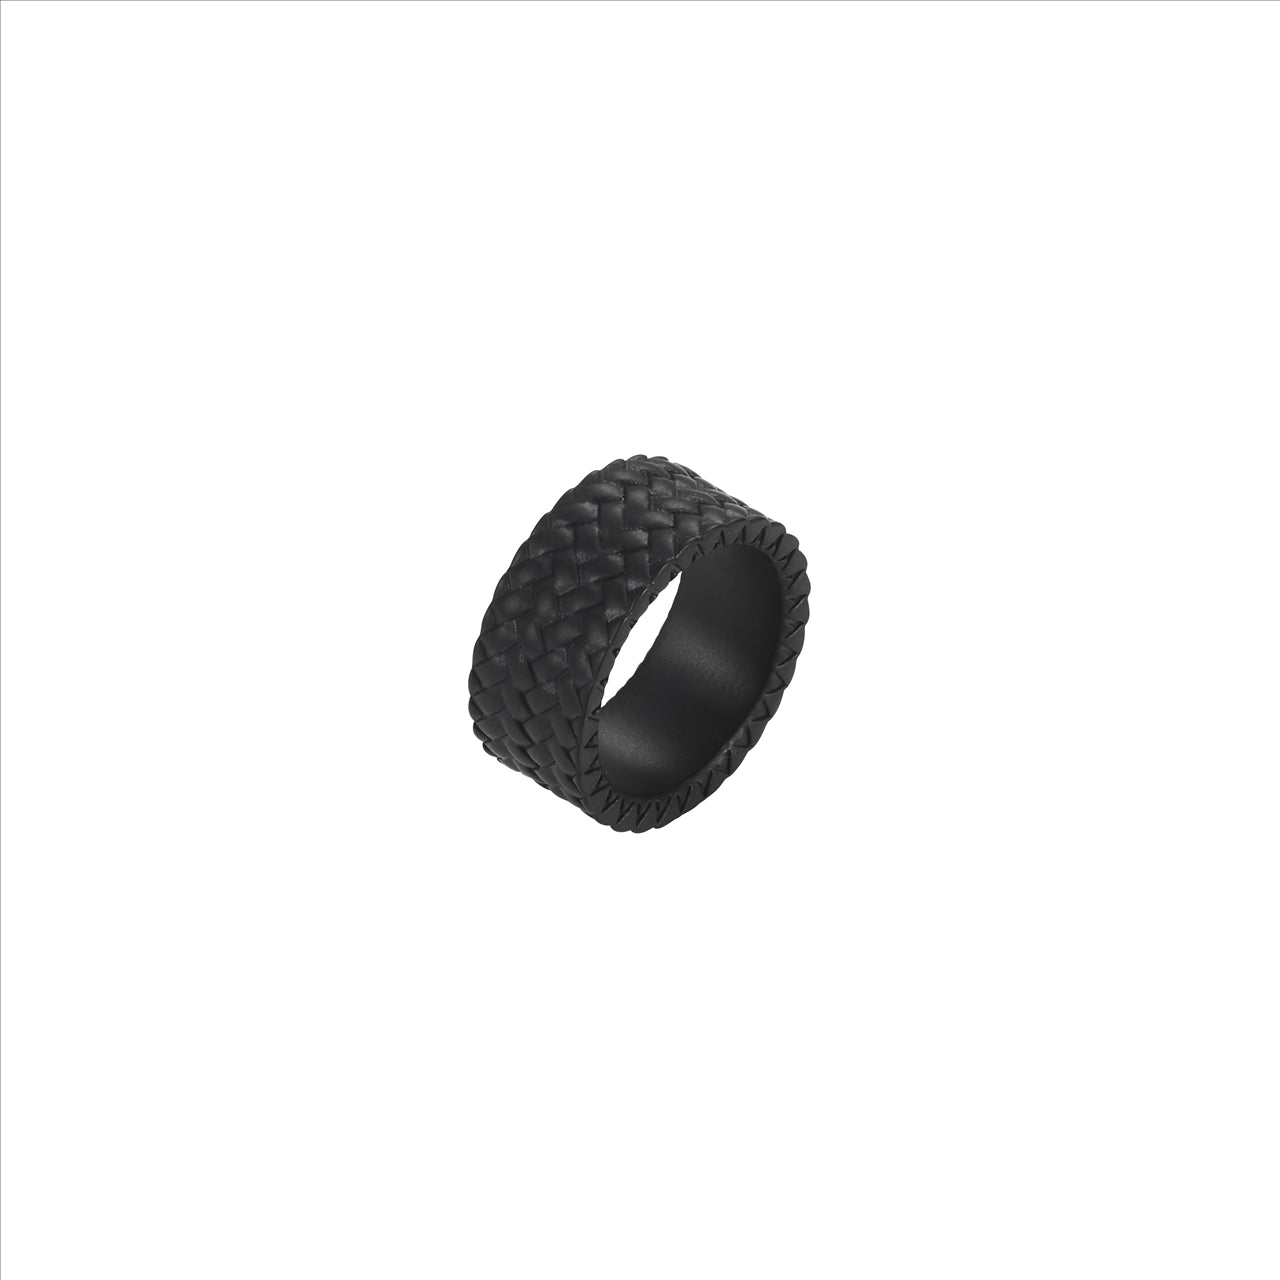 IP Black Stainless Steel Ring